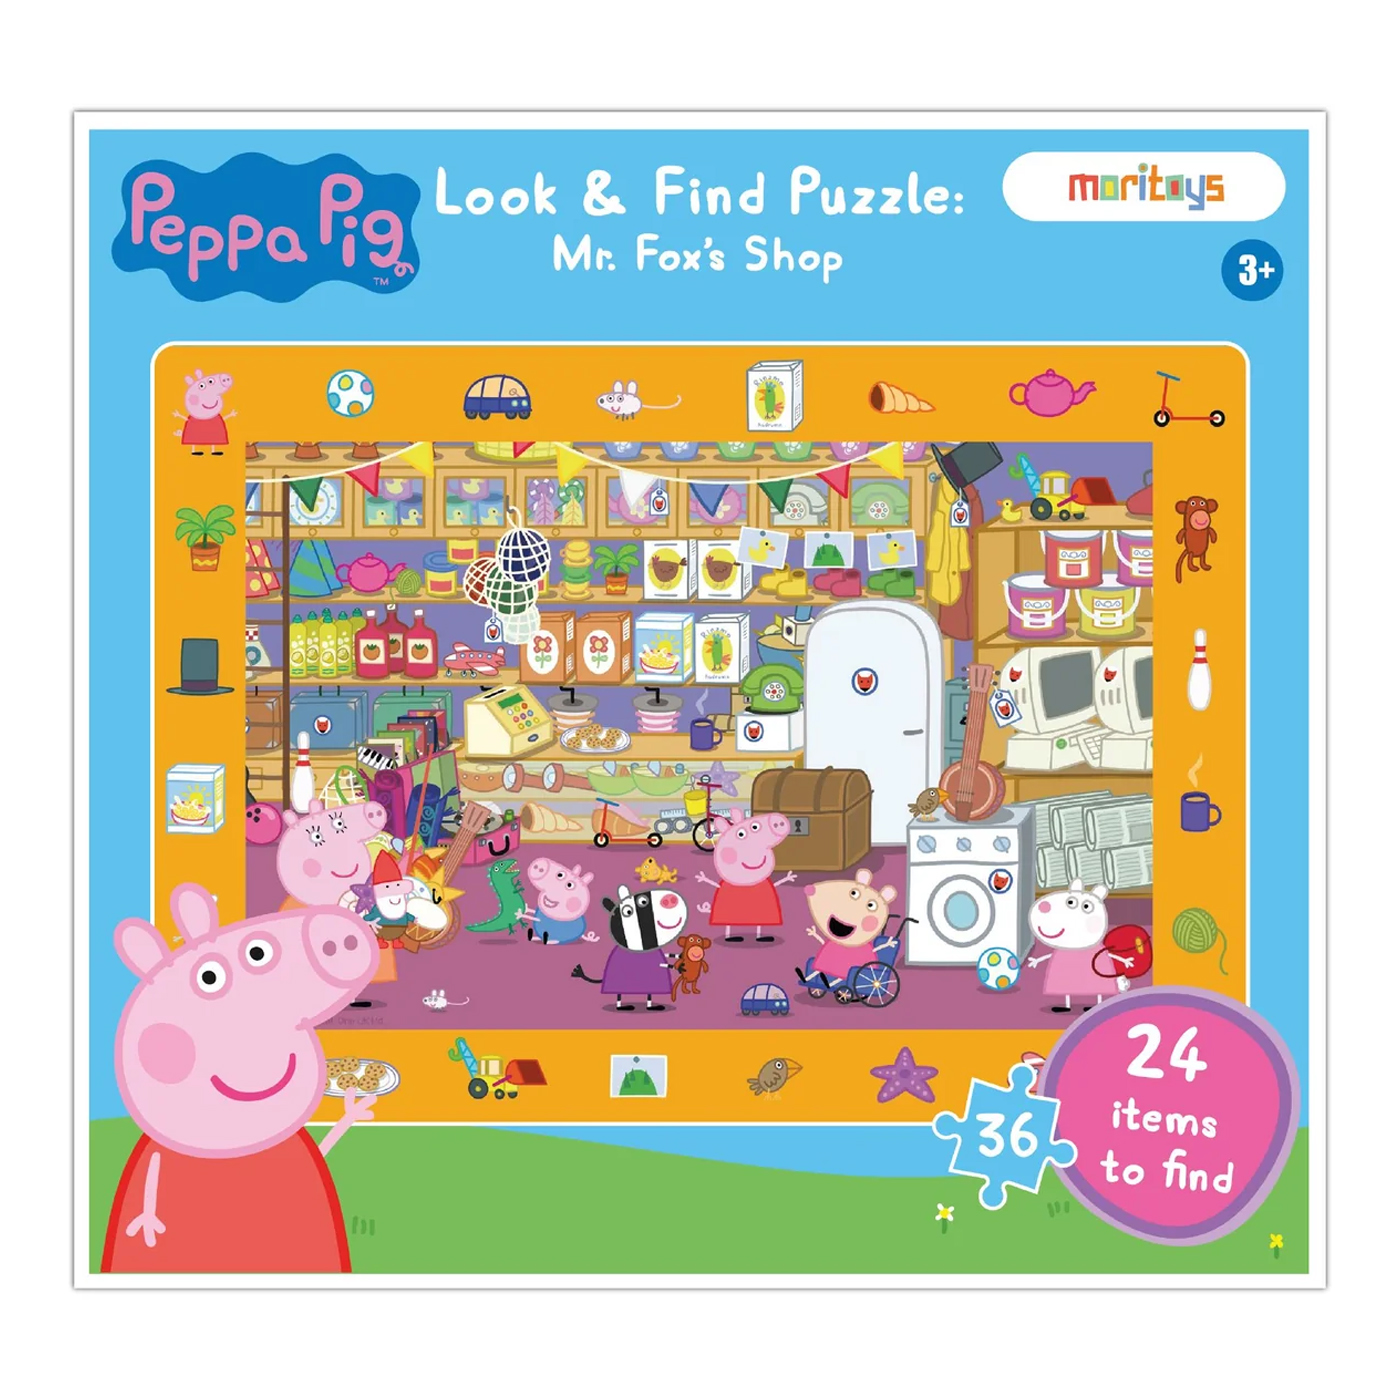  Peppa Pig - Look & Find Puzzle: Mr. Fox's Shop - 36 Parçalı Yapboz ve Gözlem Oyunu